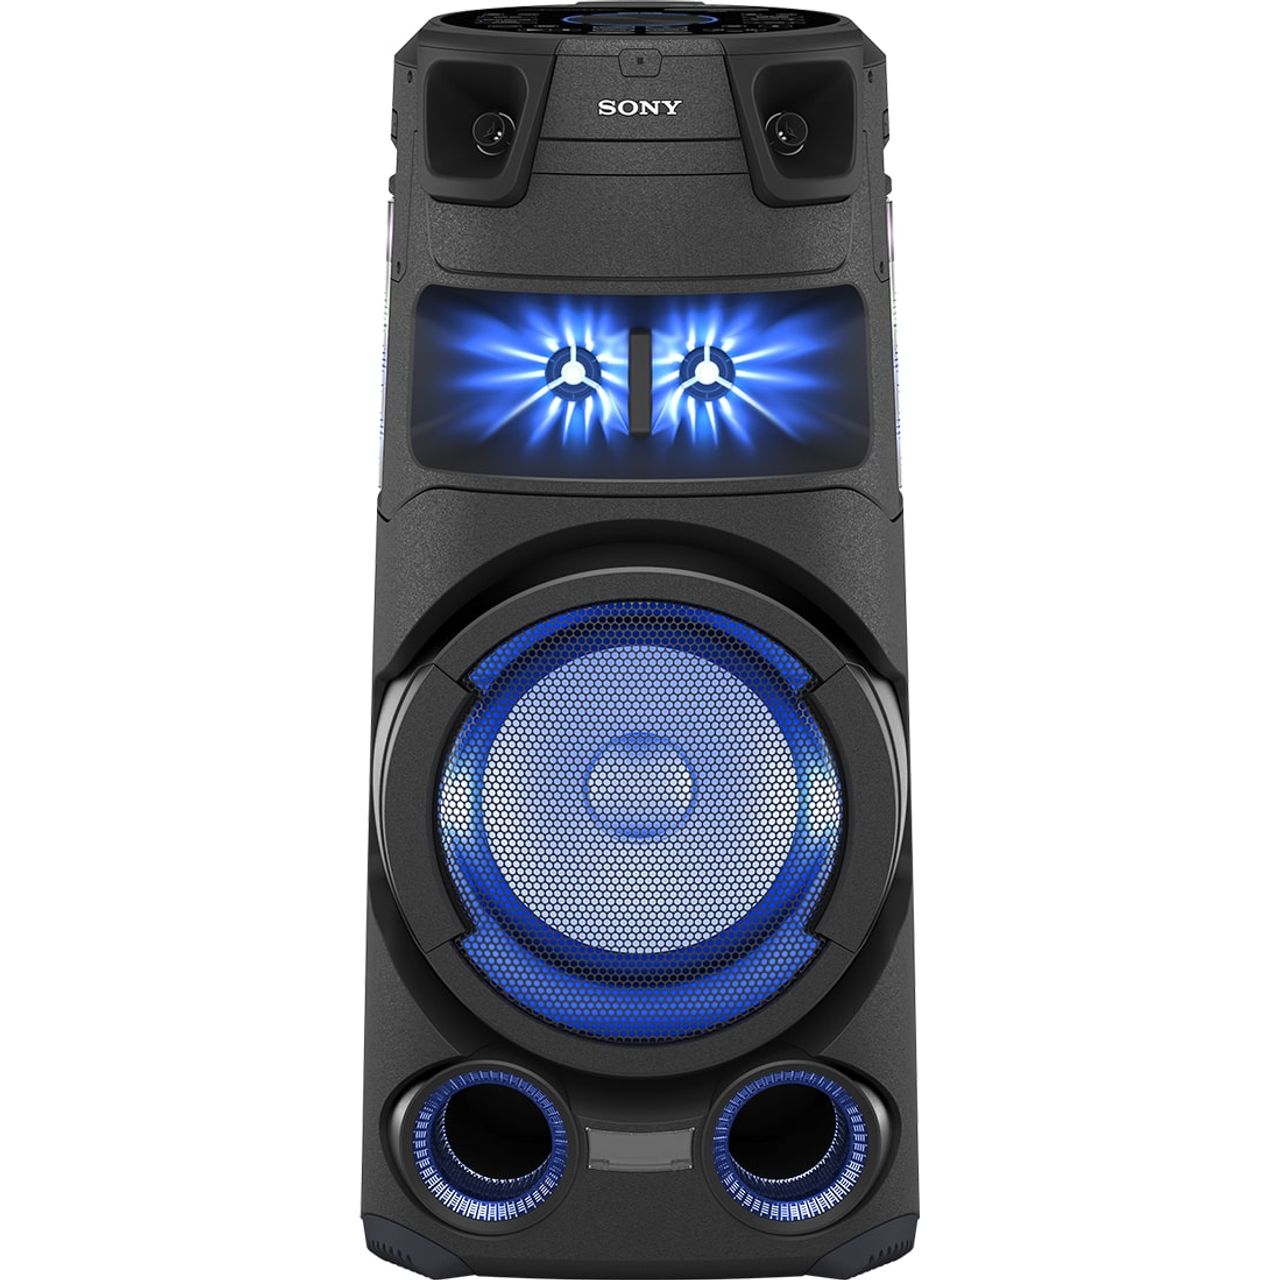 125 Sony MHC-V73D Party Watt Speaker Black -